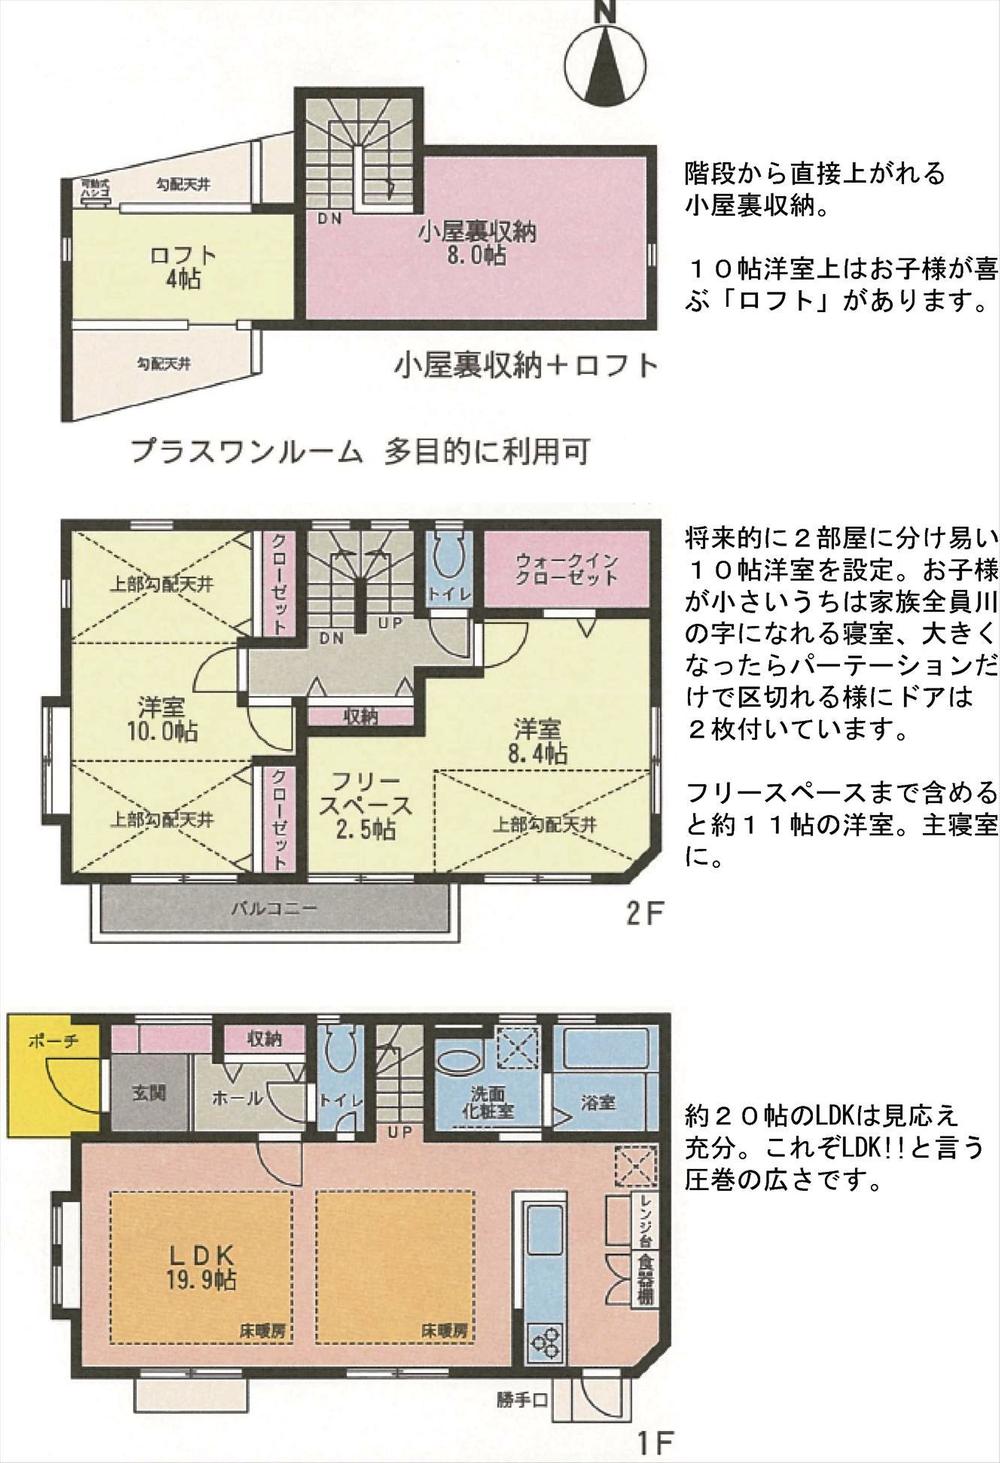 Floor plan. 41,800,000 yen, 2LDK + 2S (storeroom), Land area 127.95 sq m , Attic storage of 8 pledge to Agareru building area 99.23 sq m stairs is very convenient.